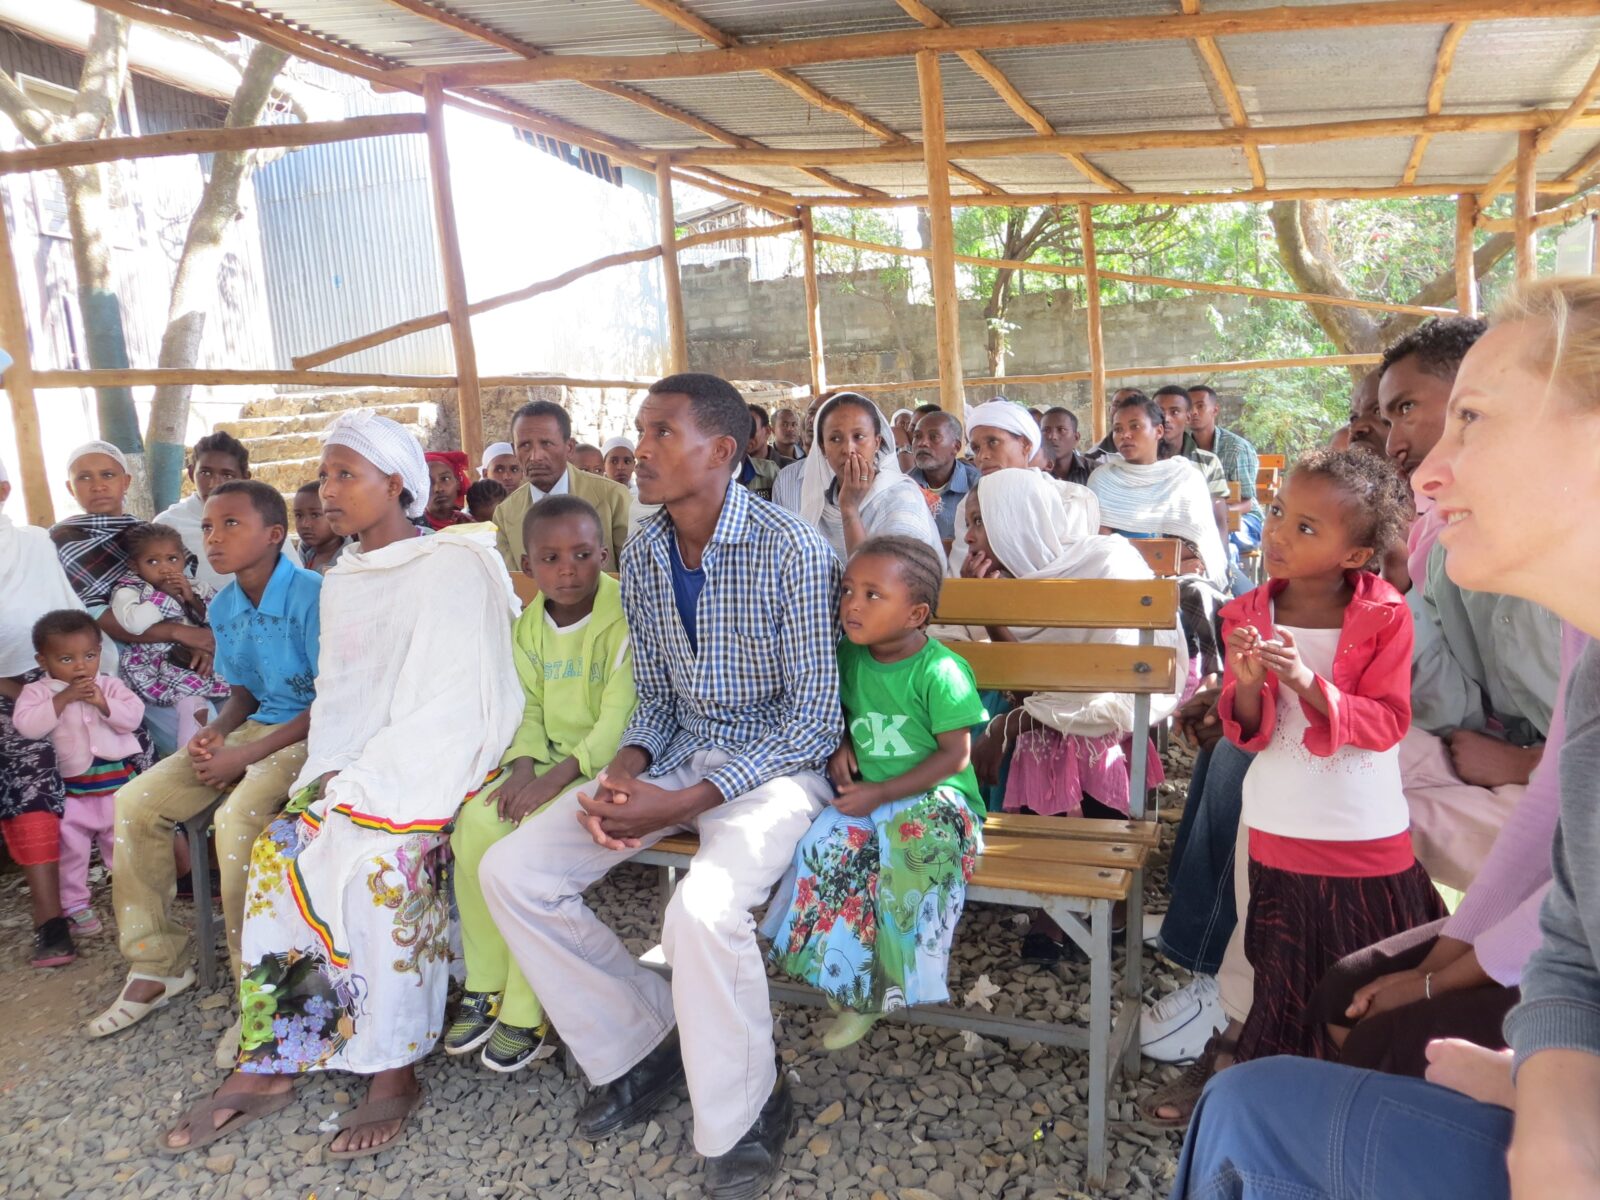 Ethiopians at Village Meeting